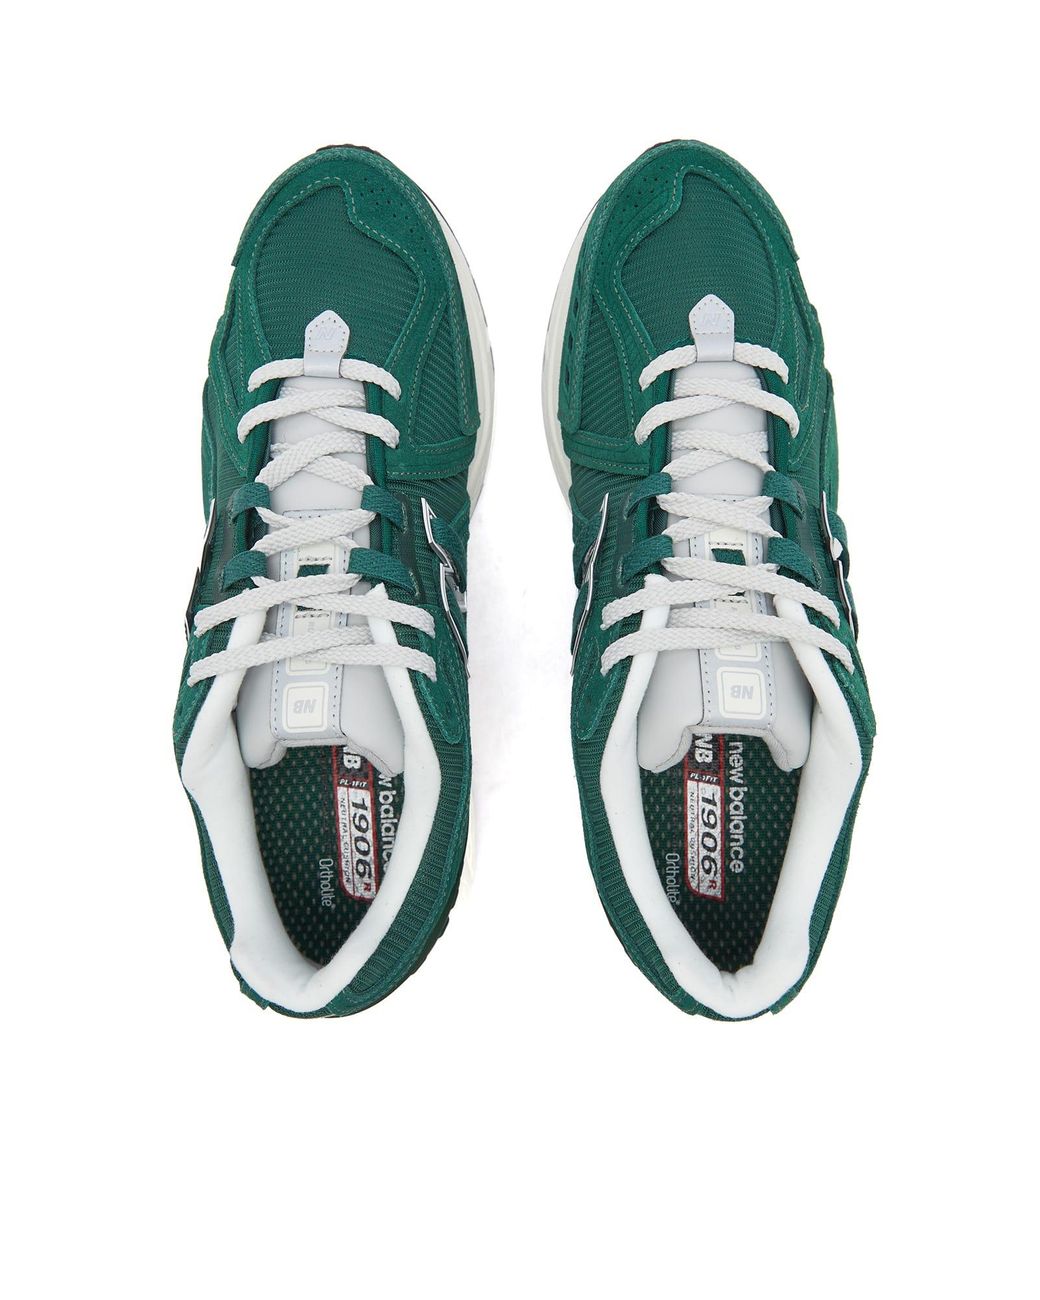 New Balance Men's Green M1906rx Sneakers